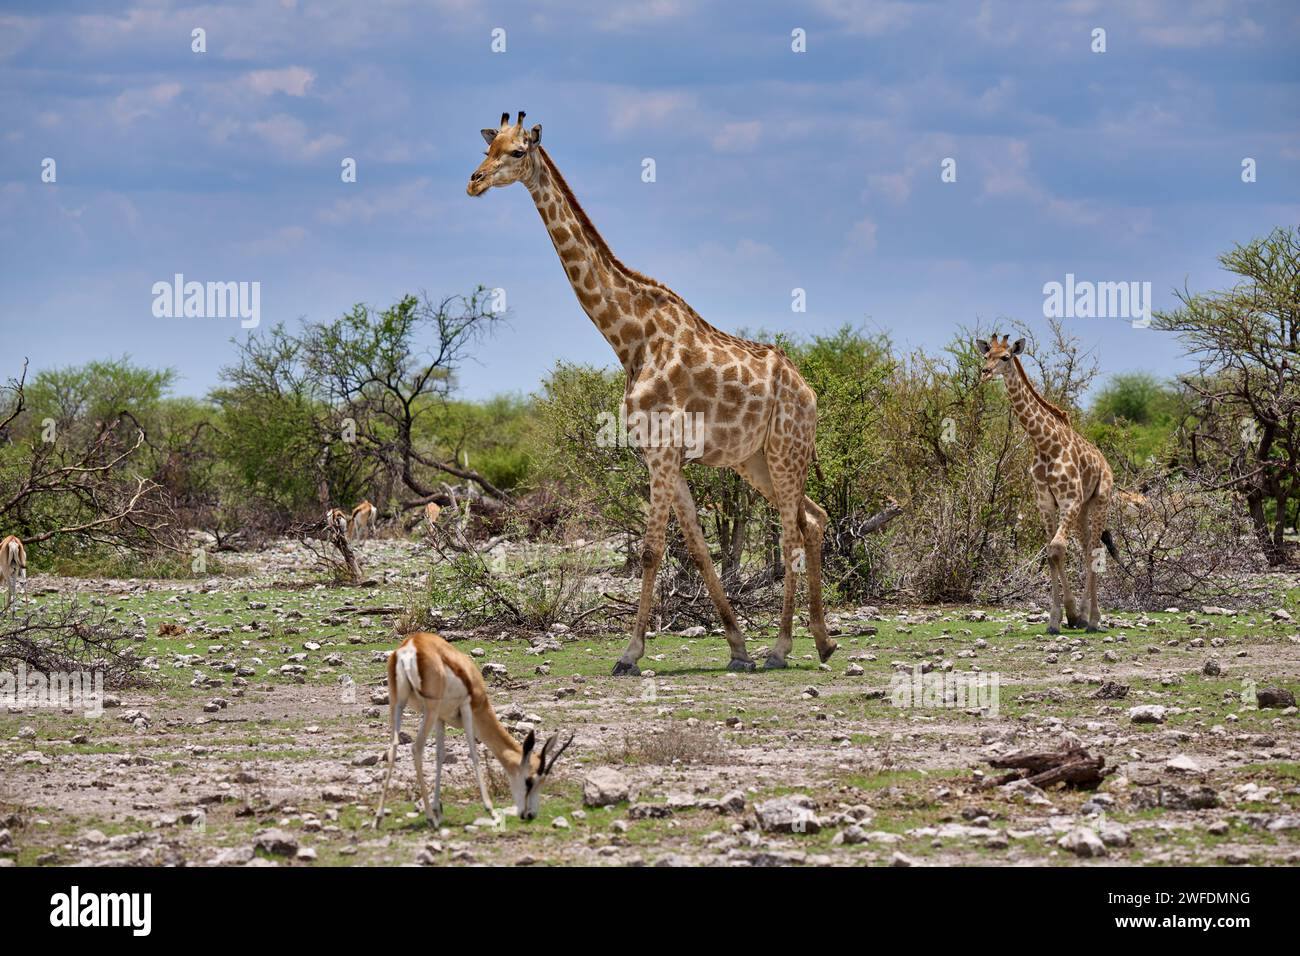 Girafe angolaise ou girafe namibienne ou girafe fumée (Giraffa camelopardalis angolensis) mère avec jeune enfant, Parc national d'Etosha, Namibie, Afrique Banque D'Images